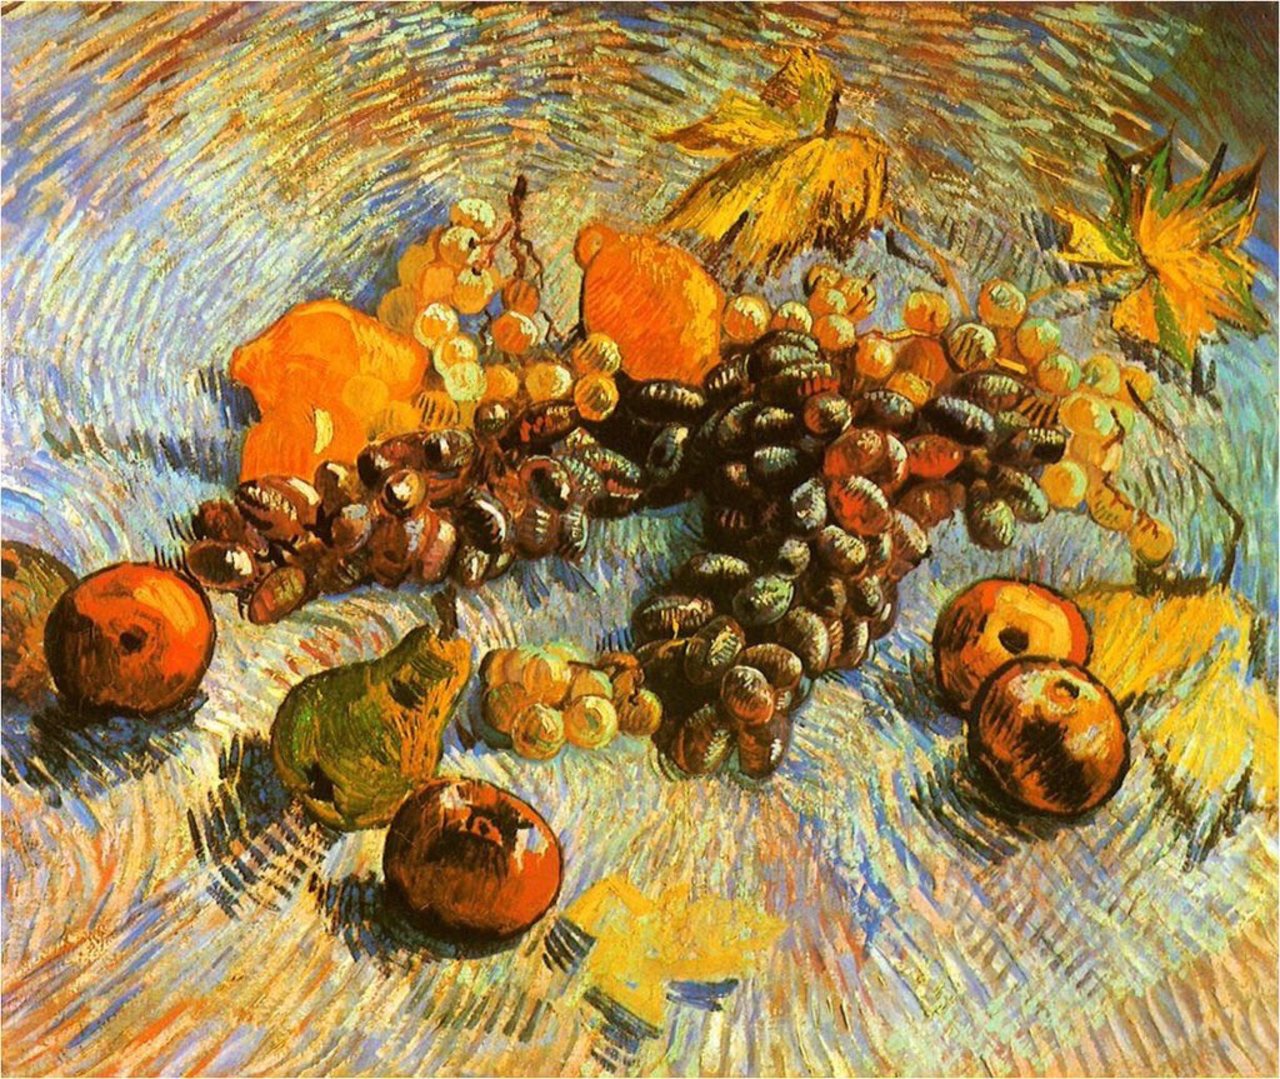 VAN GOGH, "STILL LIFE WITH APPLES, PEARS, LEMONS AND GRAPES" 1887 #vangogh #art #artrwit #twitart #gesture #artist https://t.co/o4F2OgOtiZ